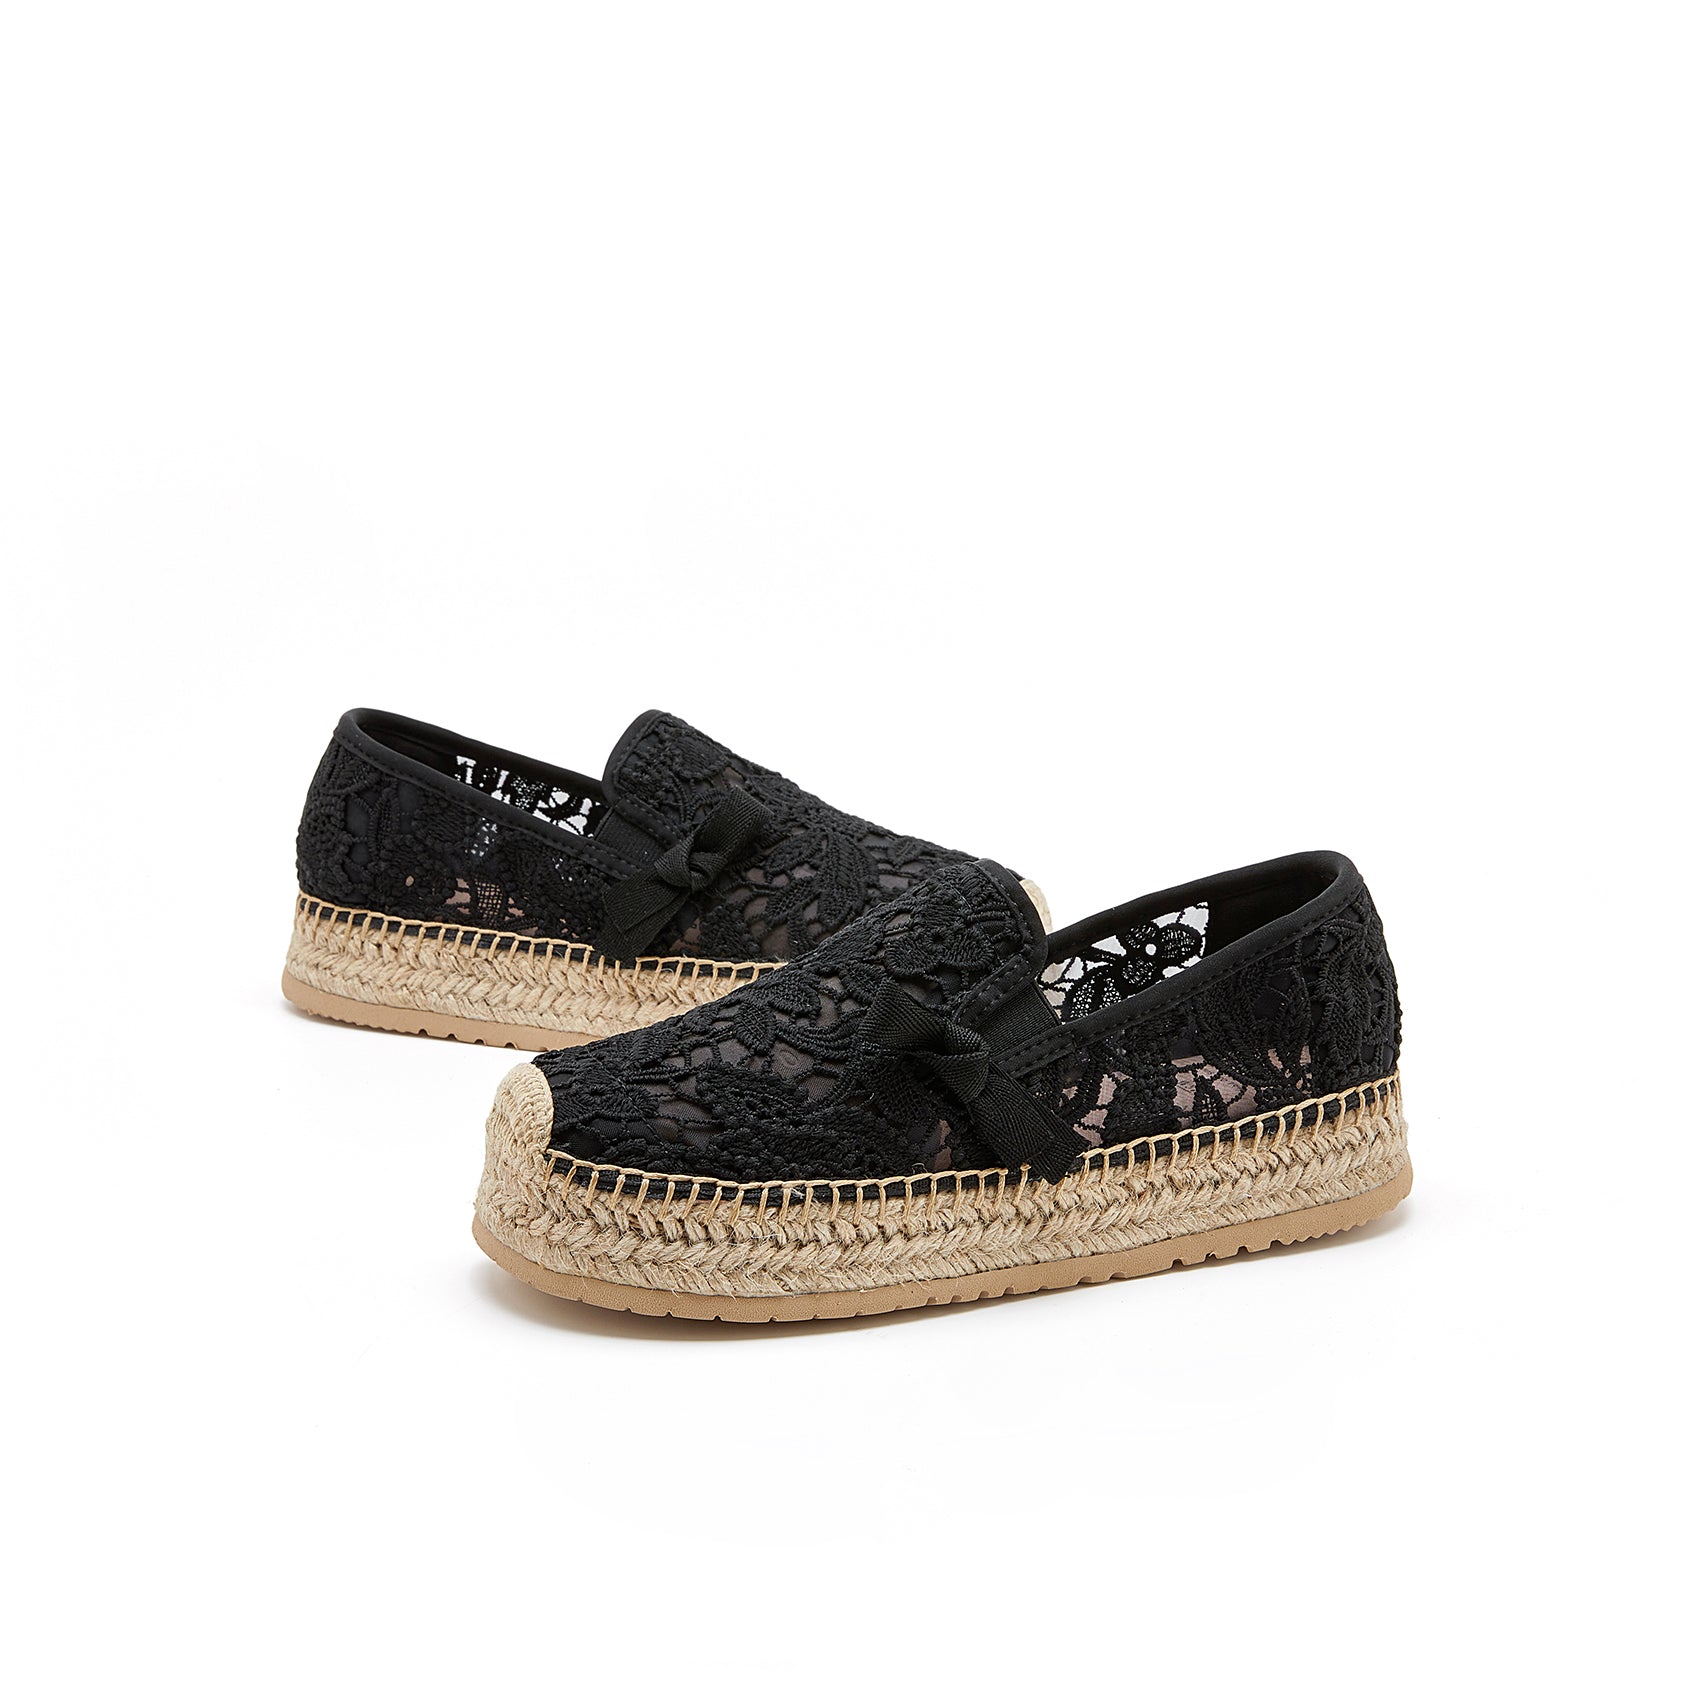 JOY&MARIO Handmade Women’s Slip-On Espadrille Mesh Loafers Flats in Black-05352W